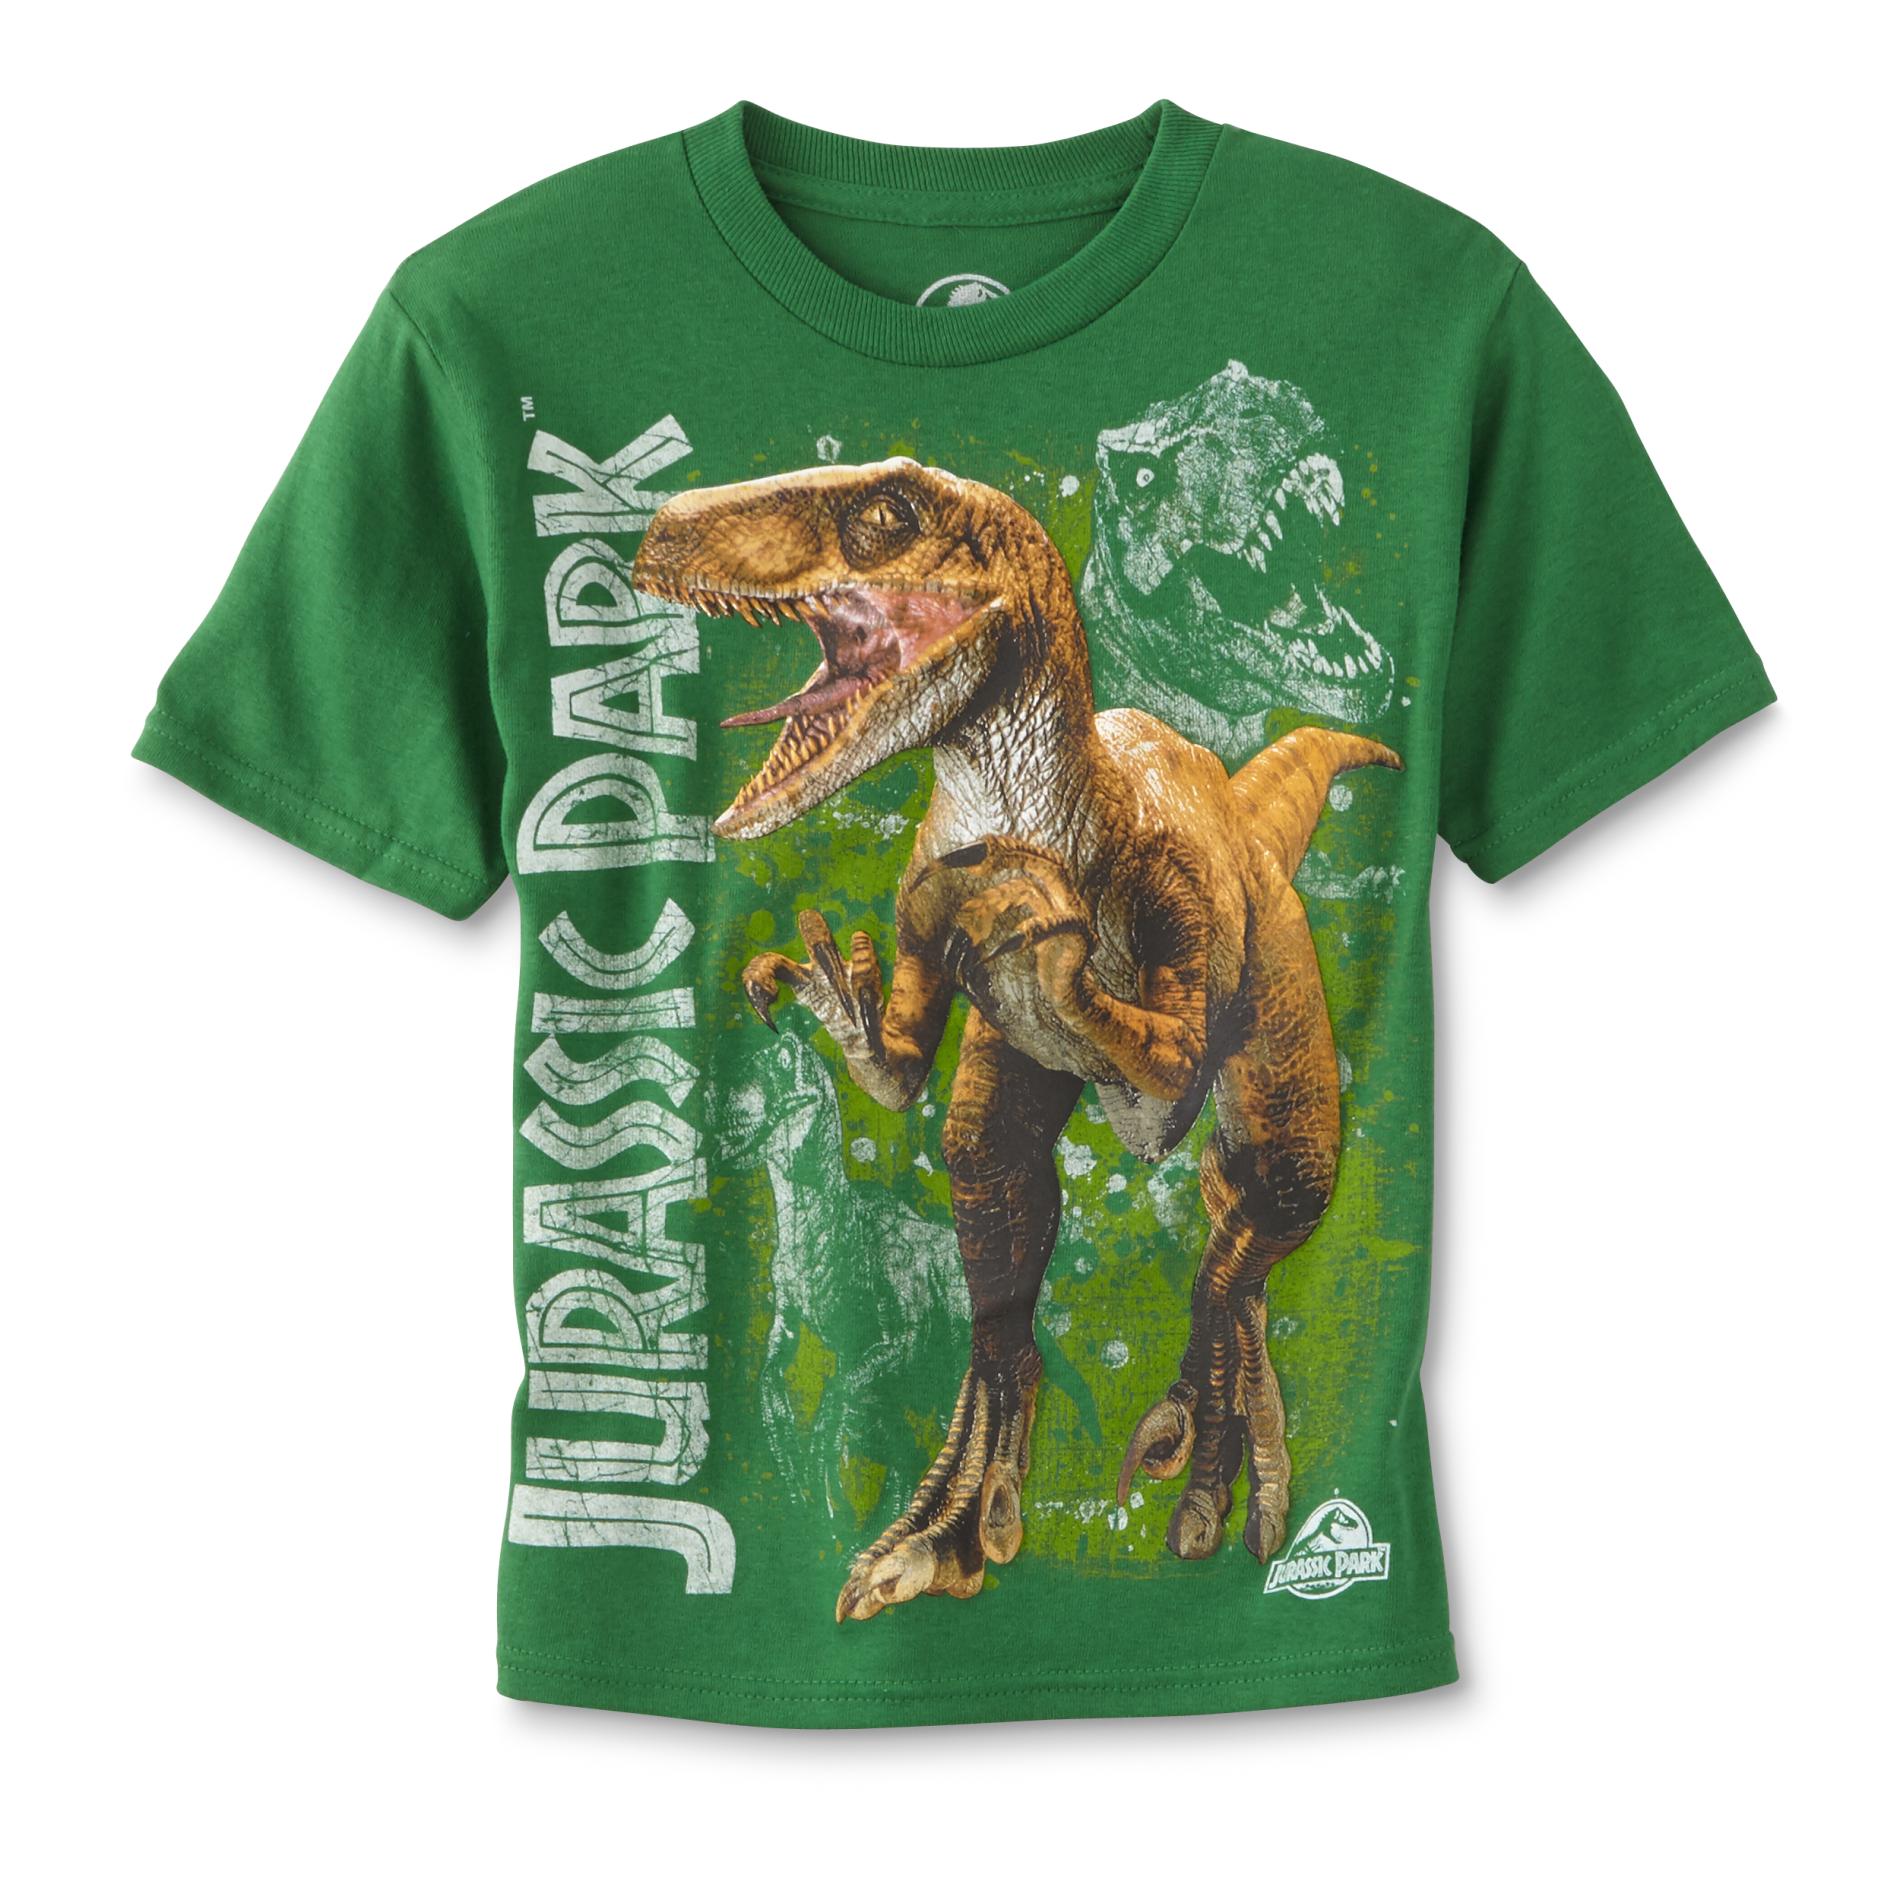 Universal Studios Jurassic Park Boys' Graphic T-Shirt - Velociraptor